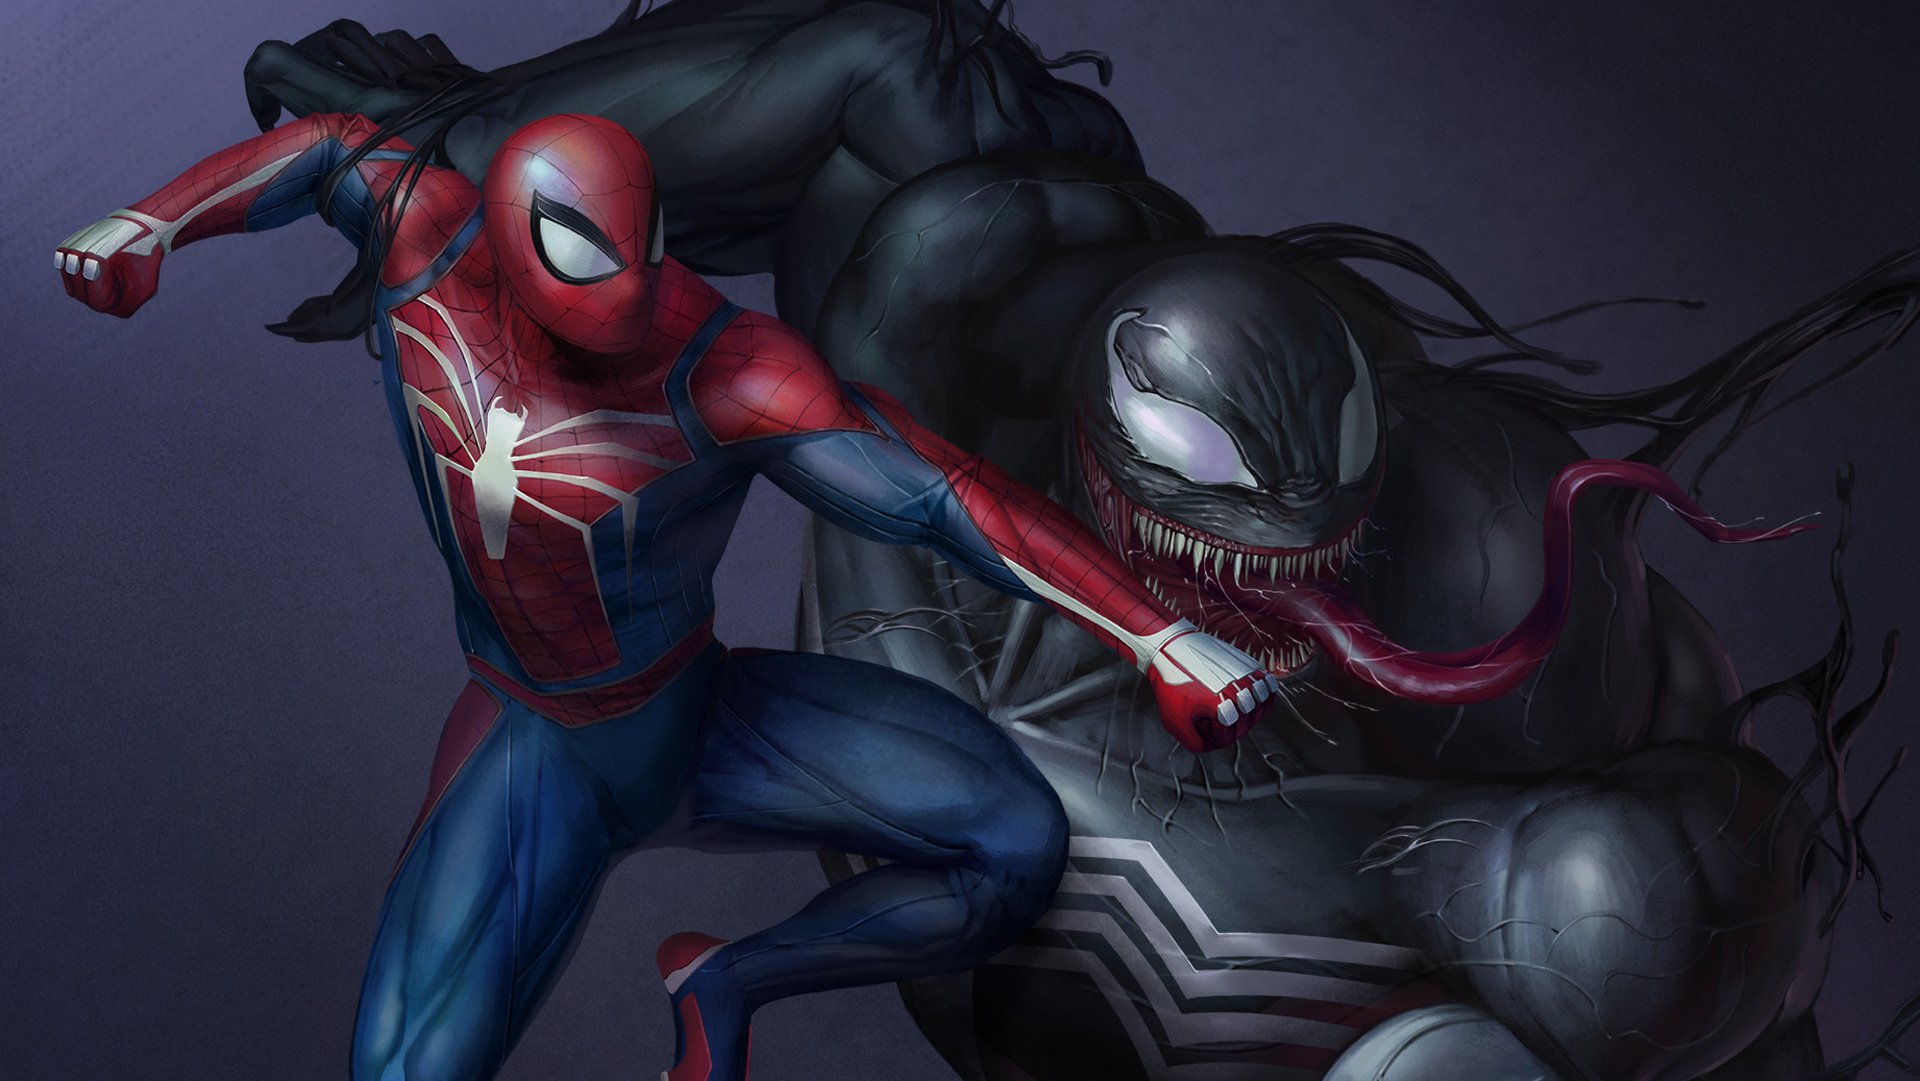 1920x1081 Spider-Man vs Venom Wallpaper Background Image. 